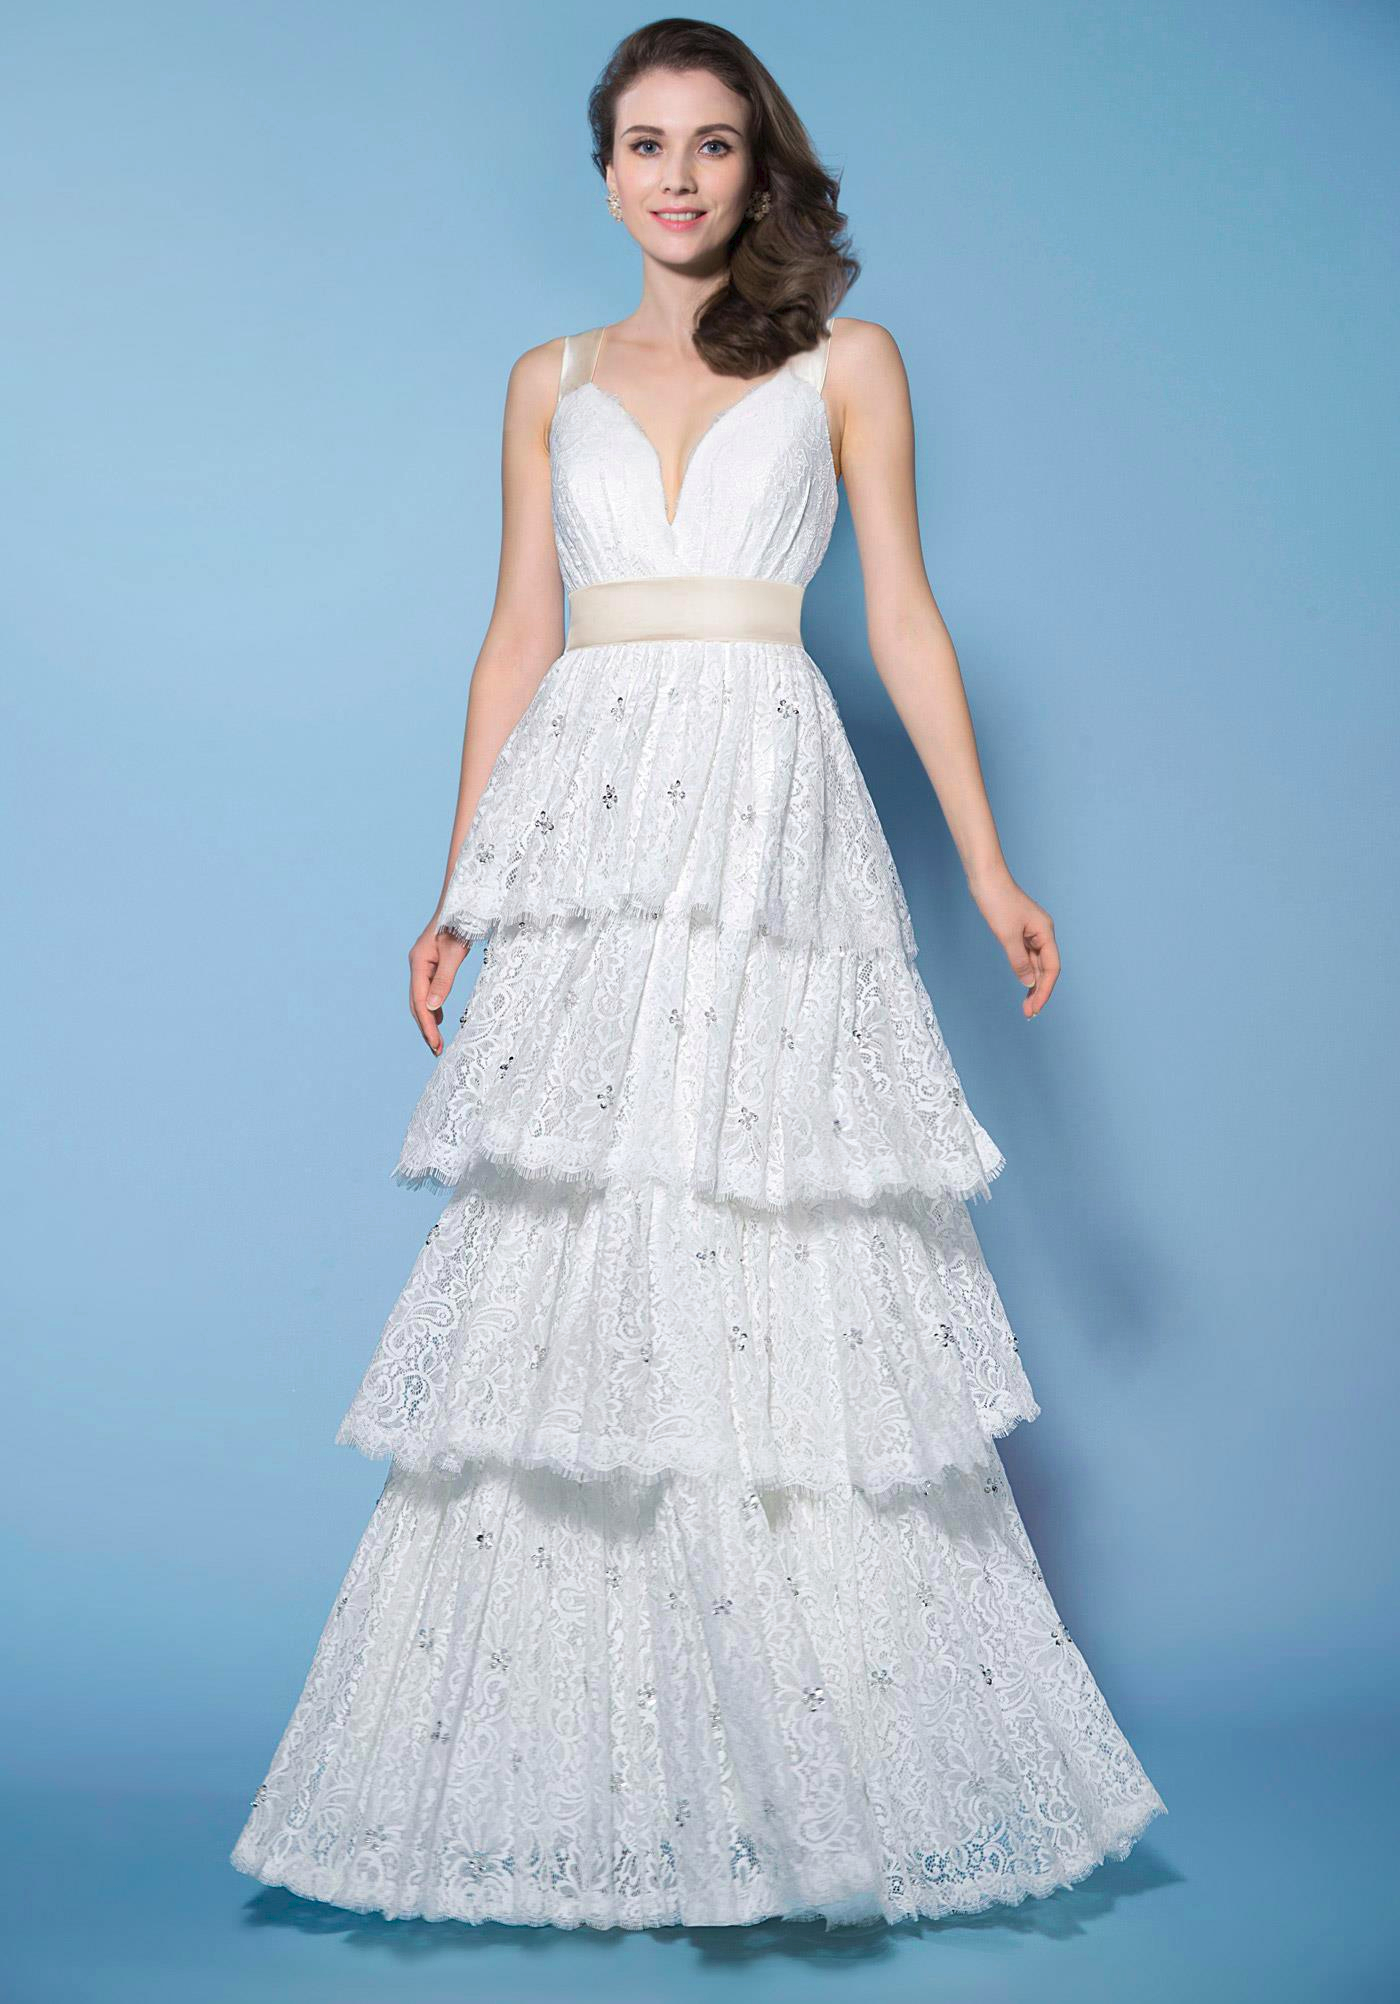 white tiered dress